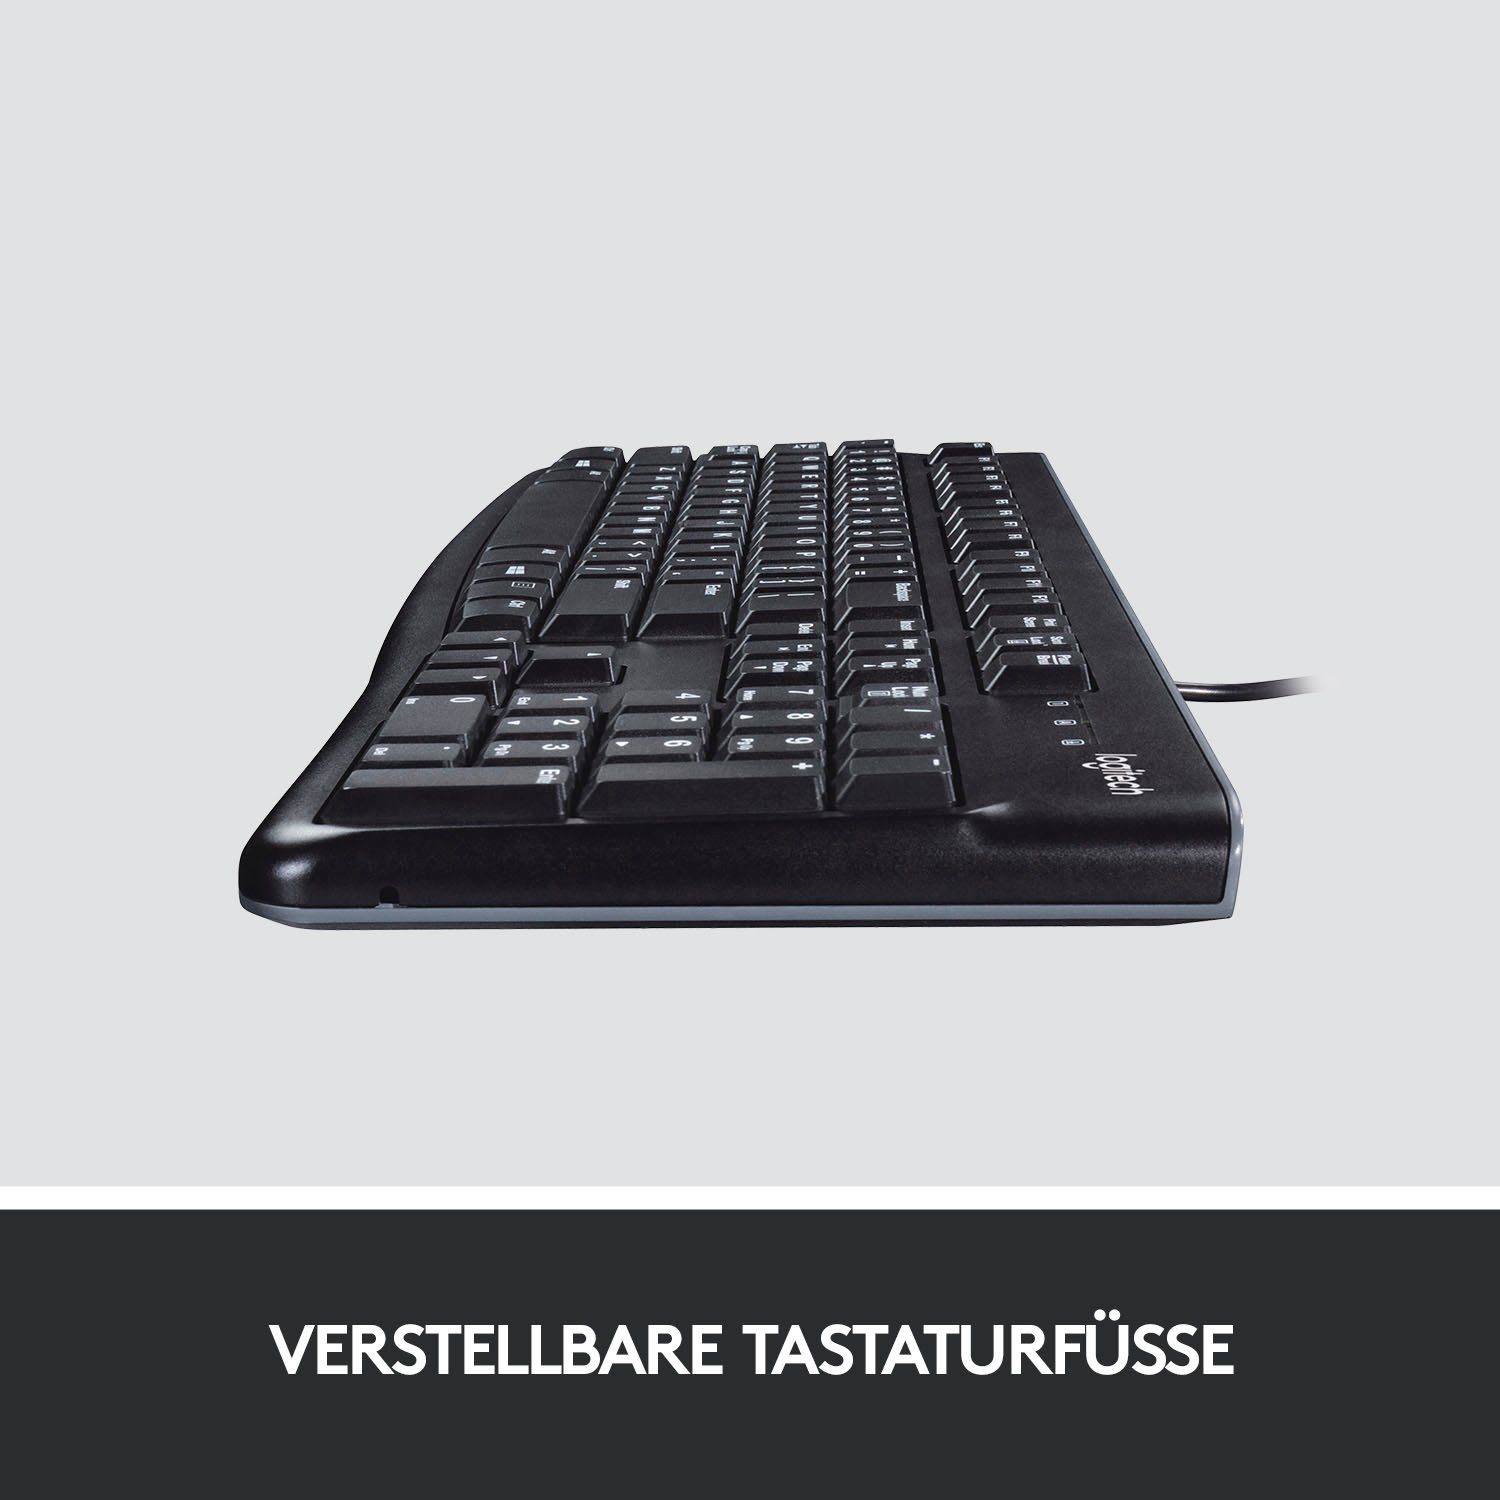 K120 PC-Tastatur (Nummernblock) Keyboard Logitech for Business Schwarz